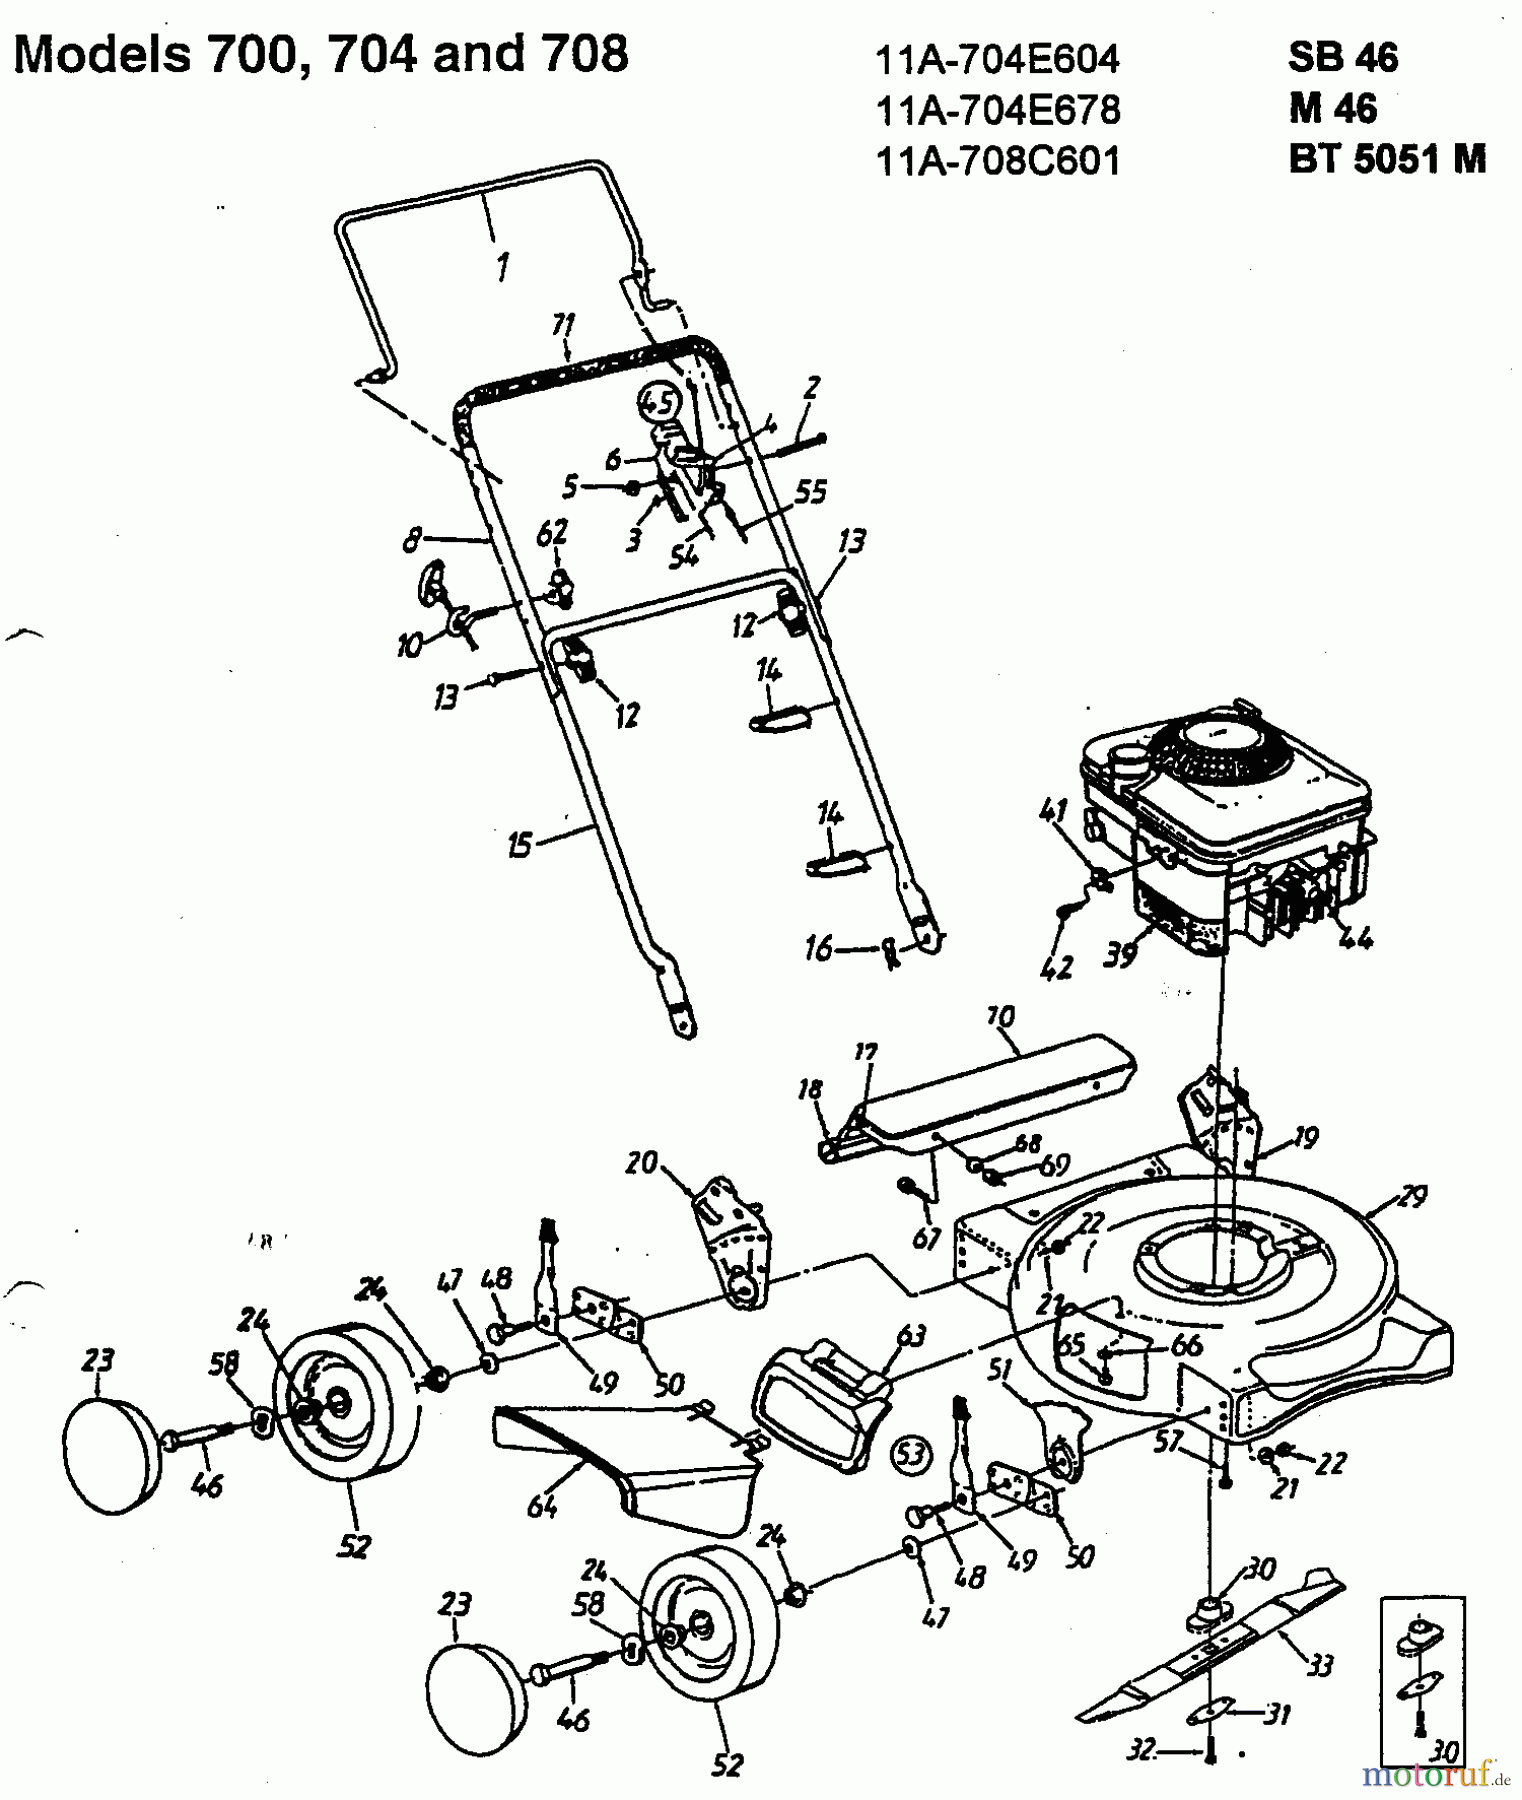  Gutbrod Petrol mower SB 46 11A-704E604  (1998) Basic machine